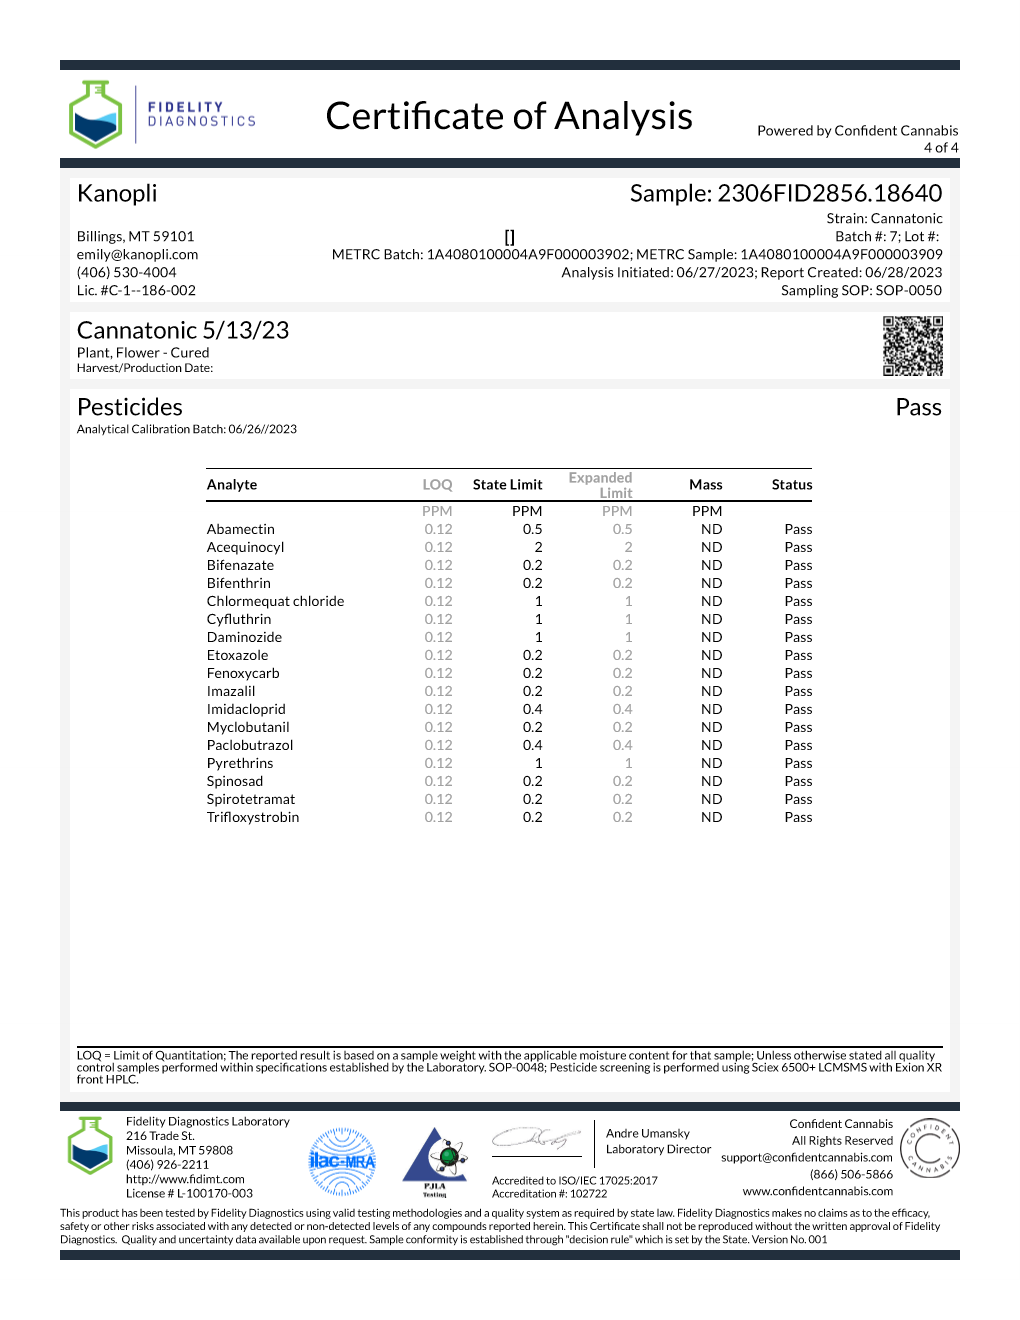 Cannatonic - Hybrid 7.34% THC, 7.47% CBD (May 2023) shorties (2.5 grams)